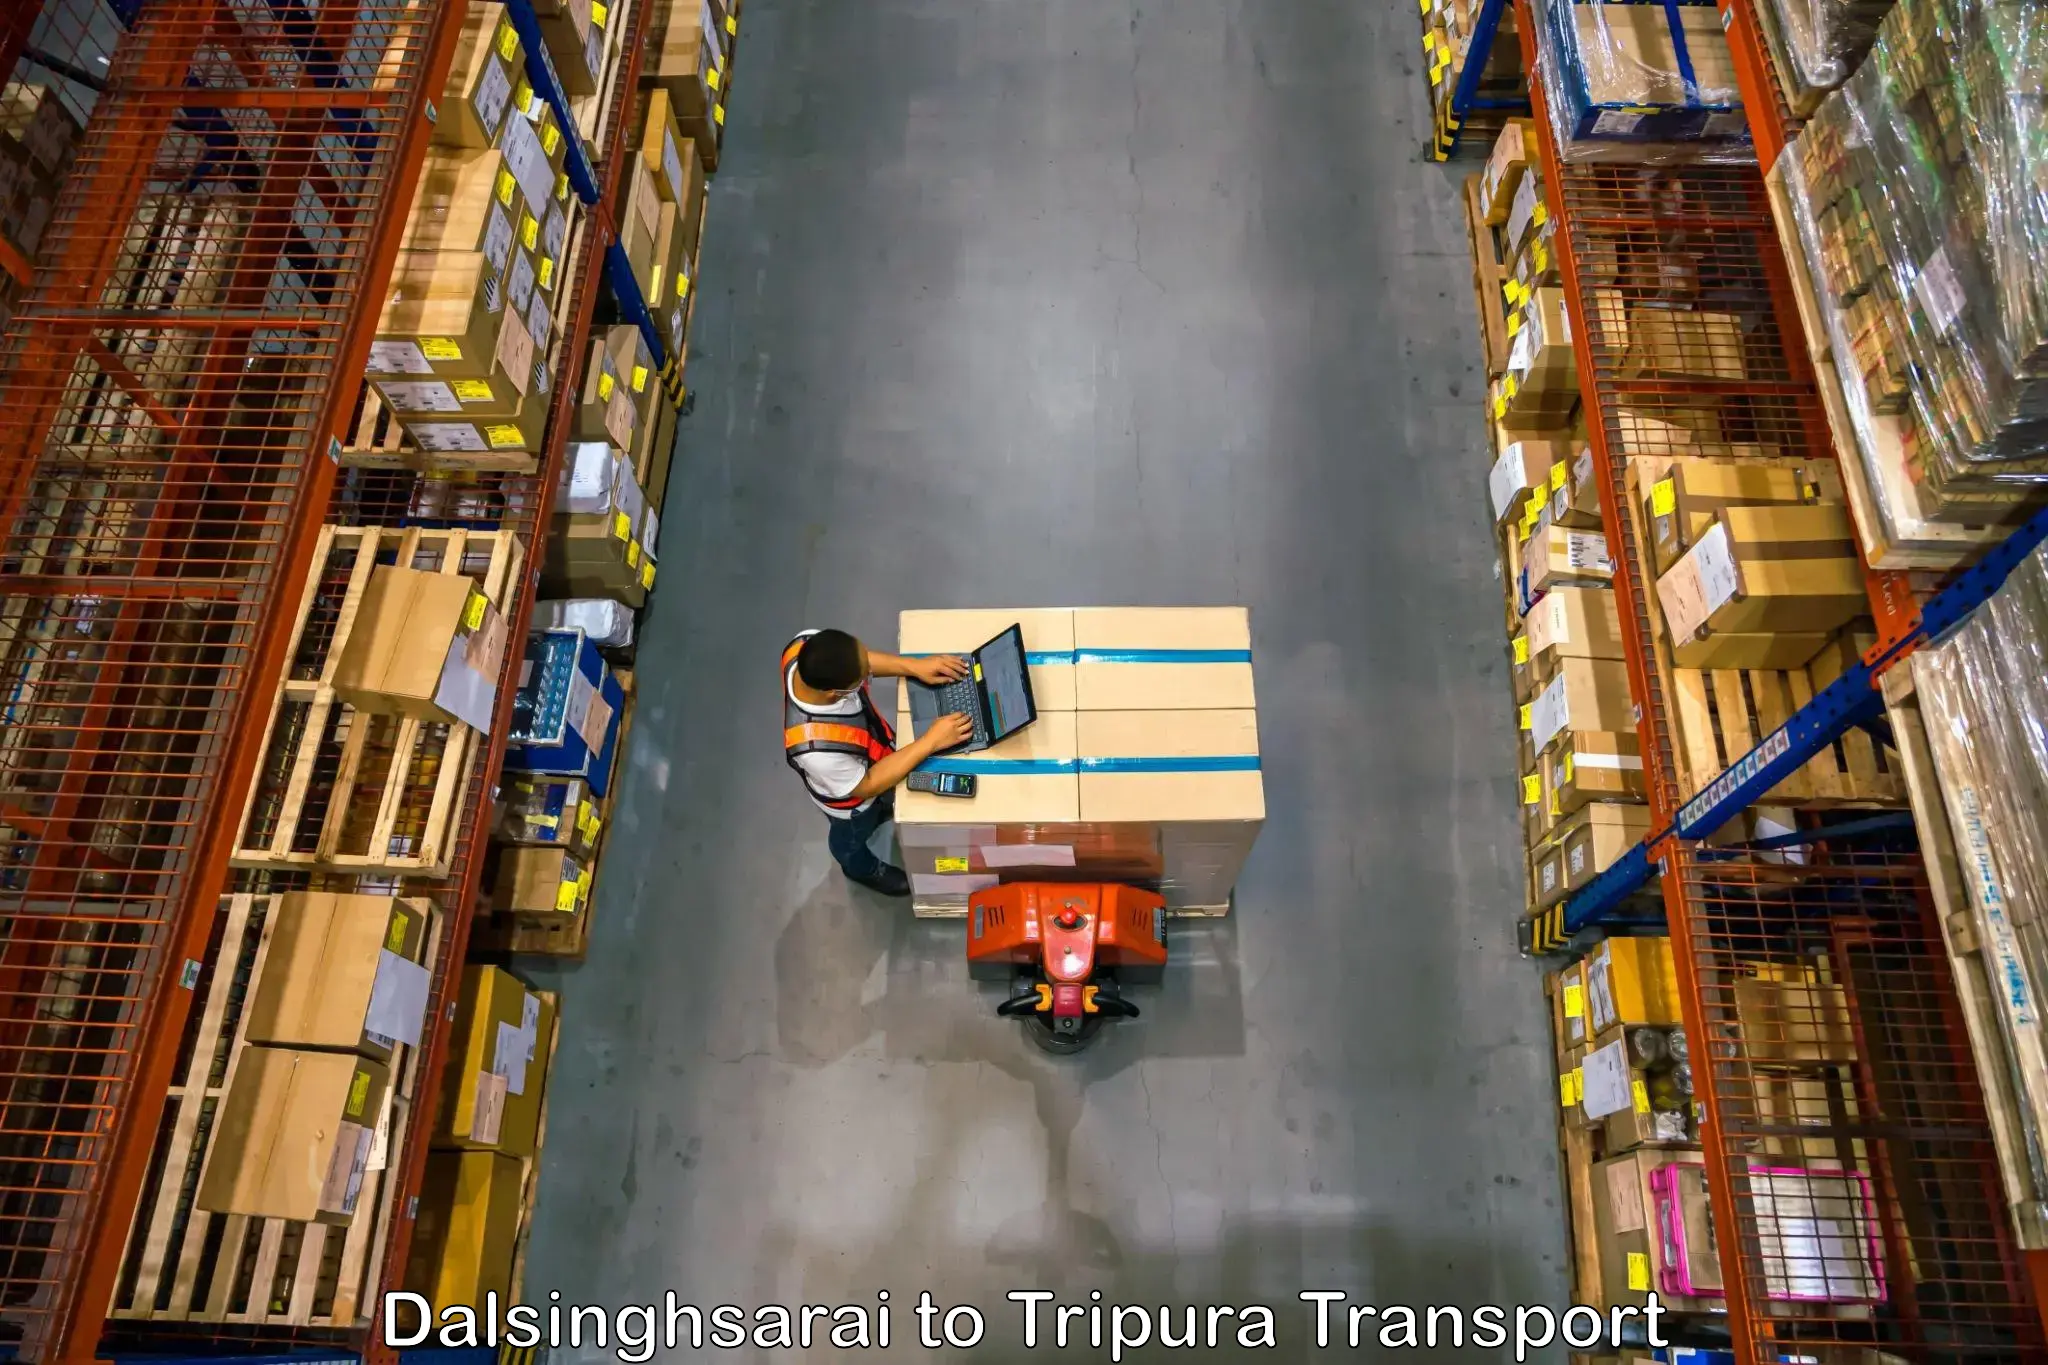 Transportation services in Dalsinghsarai to Udaipur Tripura